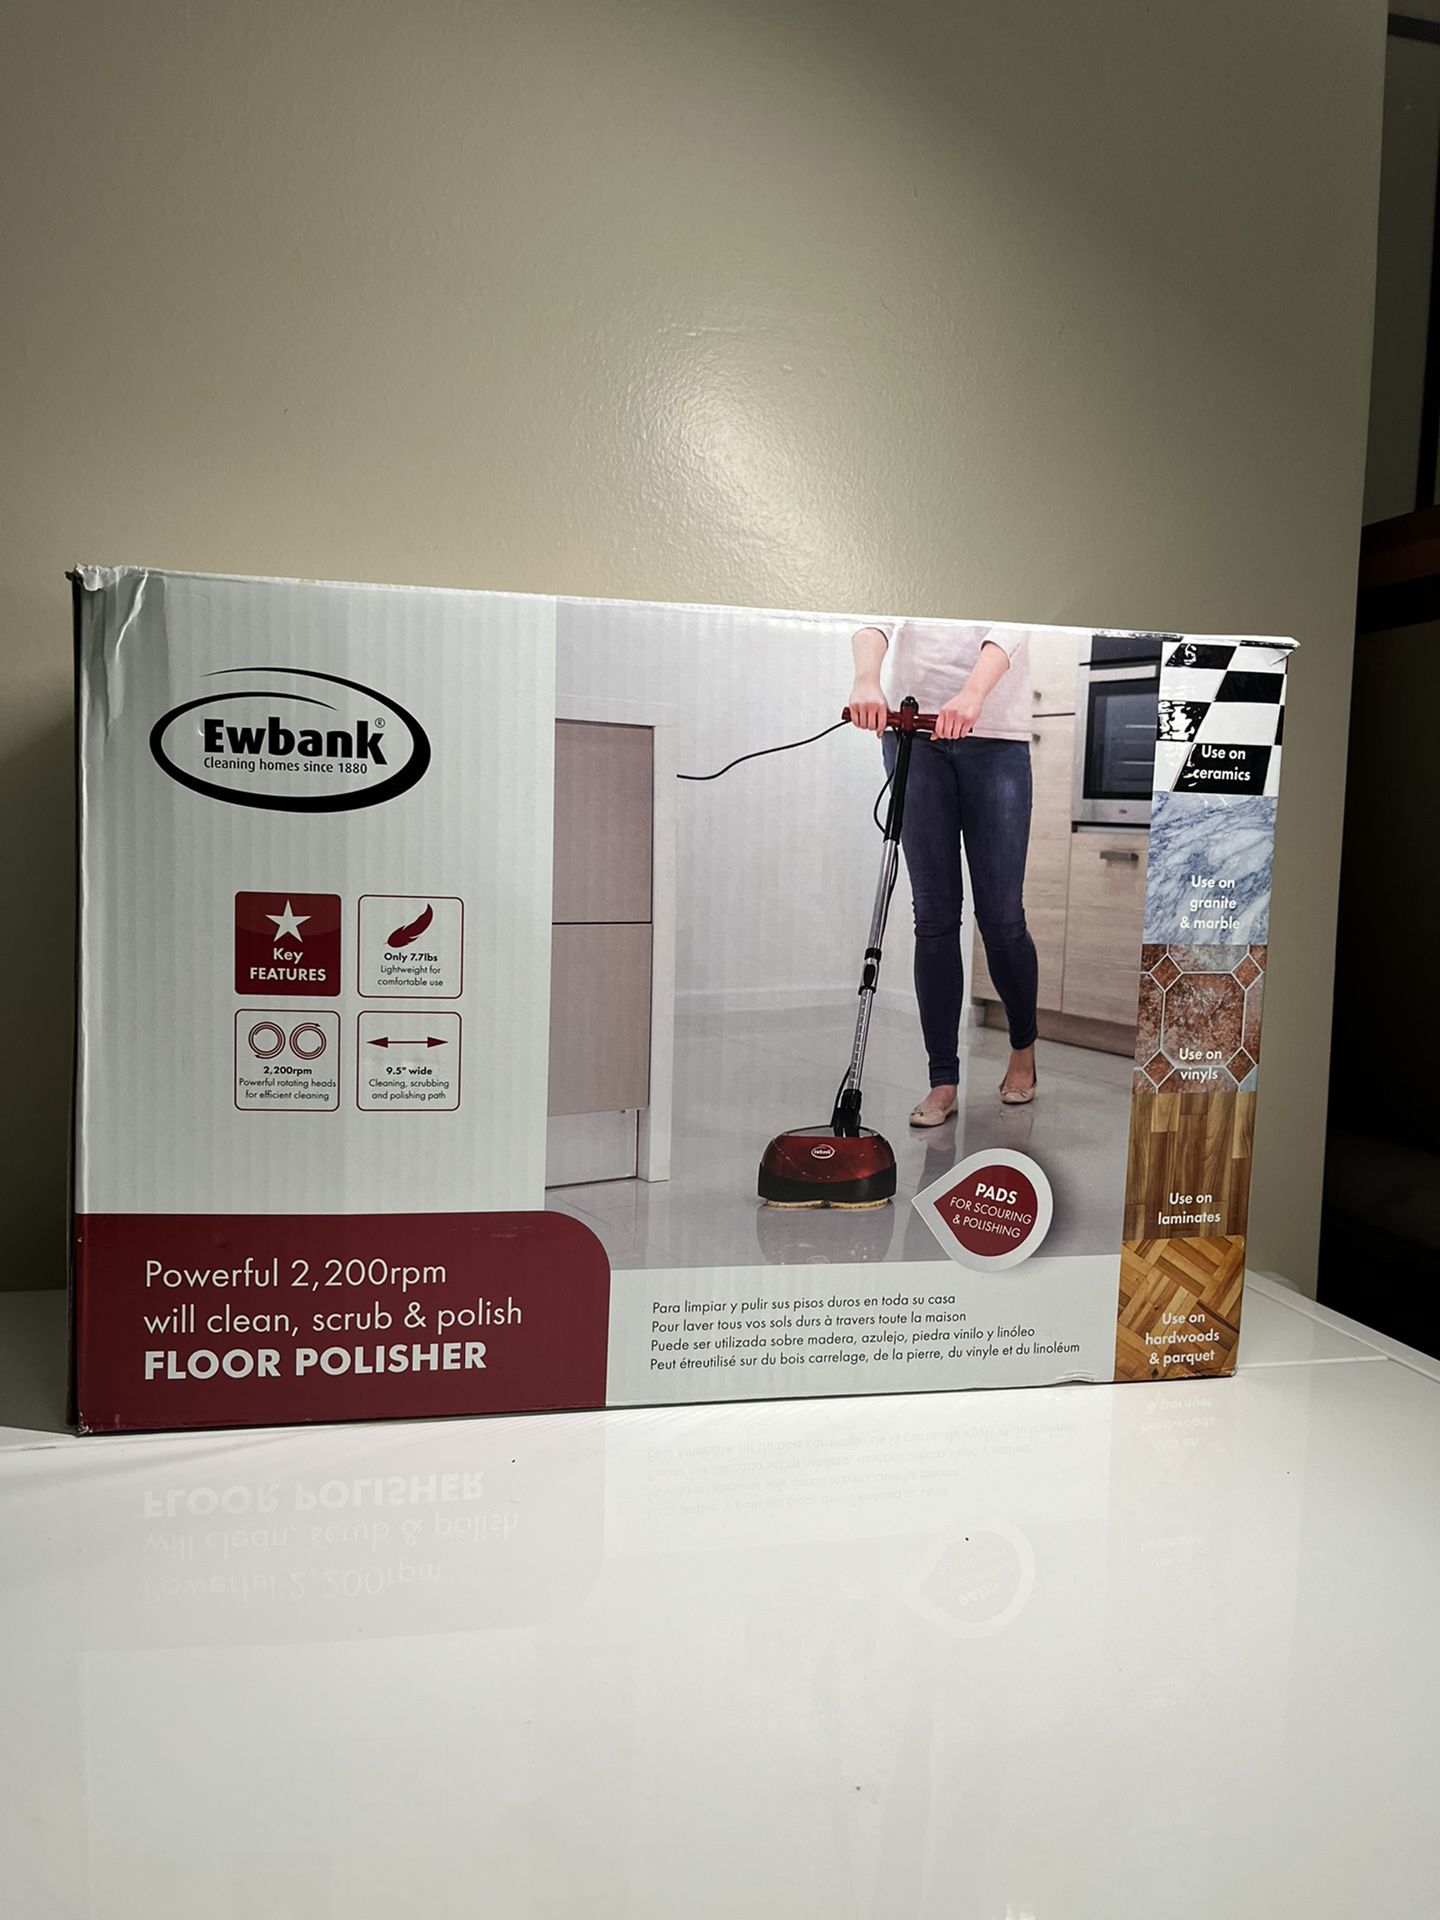 Ewbank 23 Foot Power Cord Floor Cleaner Scrubber & Polisher